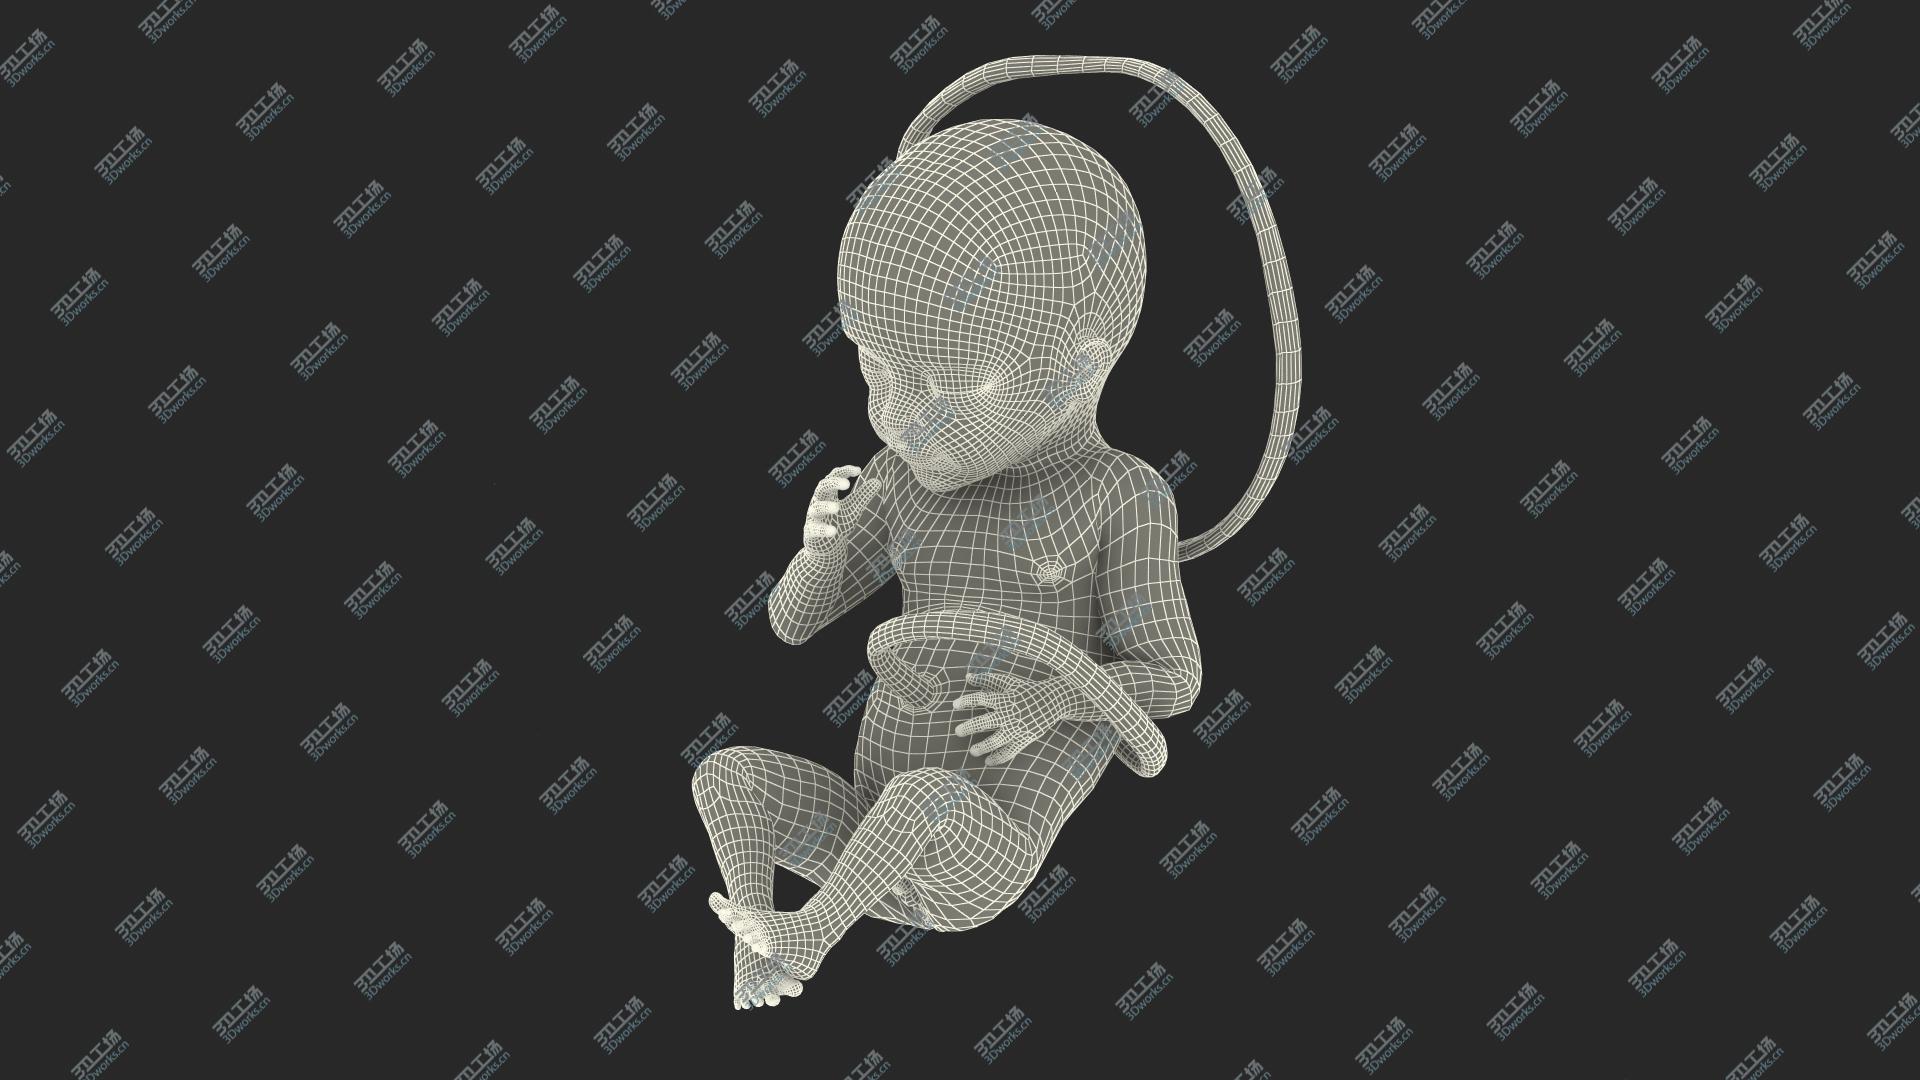 images/goods_img/20210313/3D Human Fetus at 24 Weeks Rigged model/5.jpg